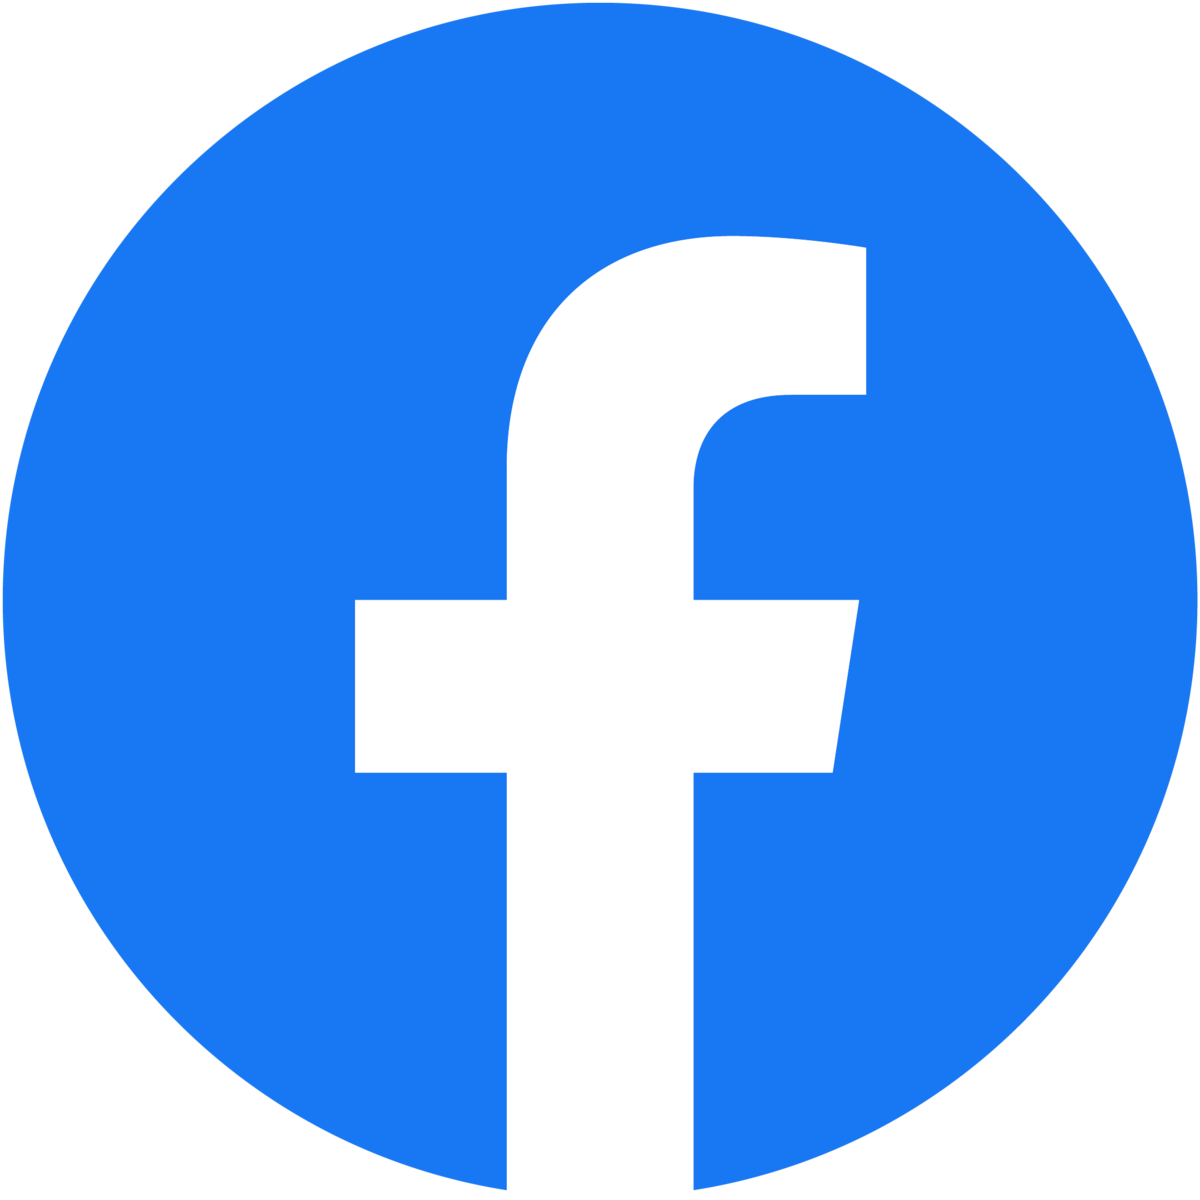 facebook sign in